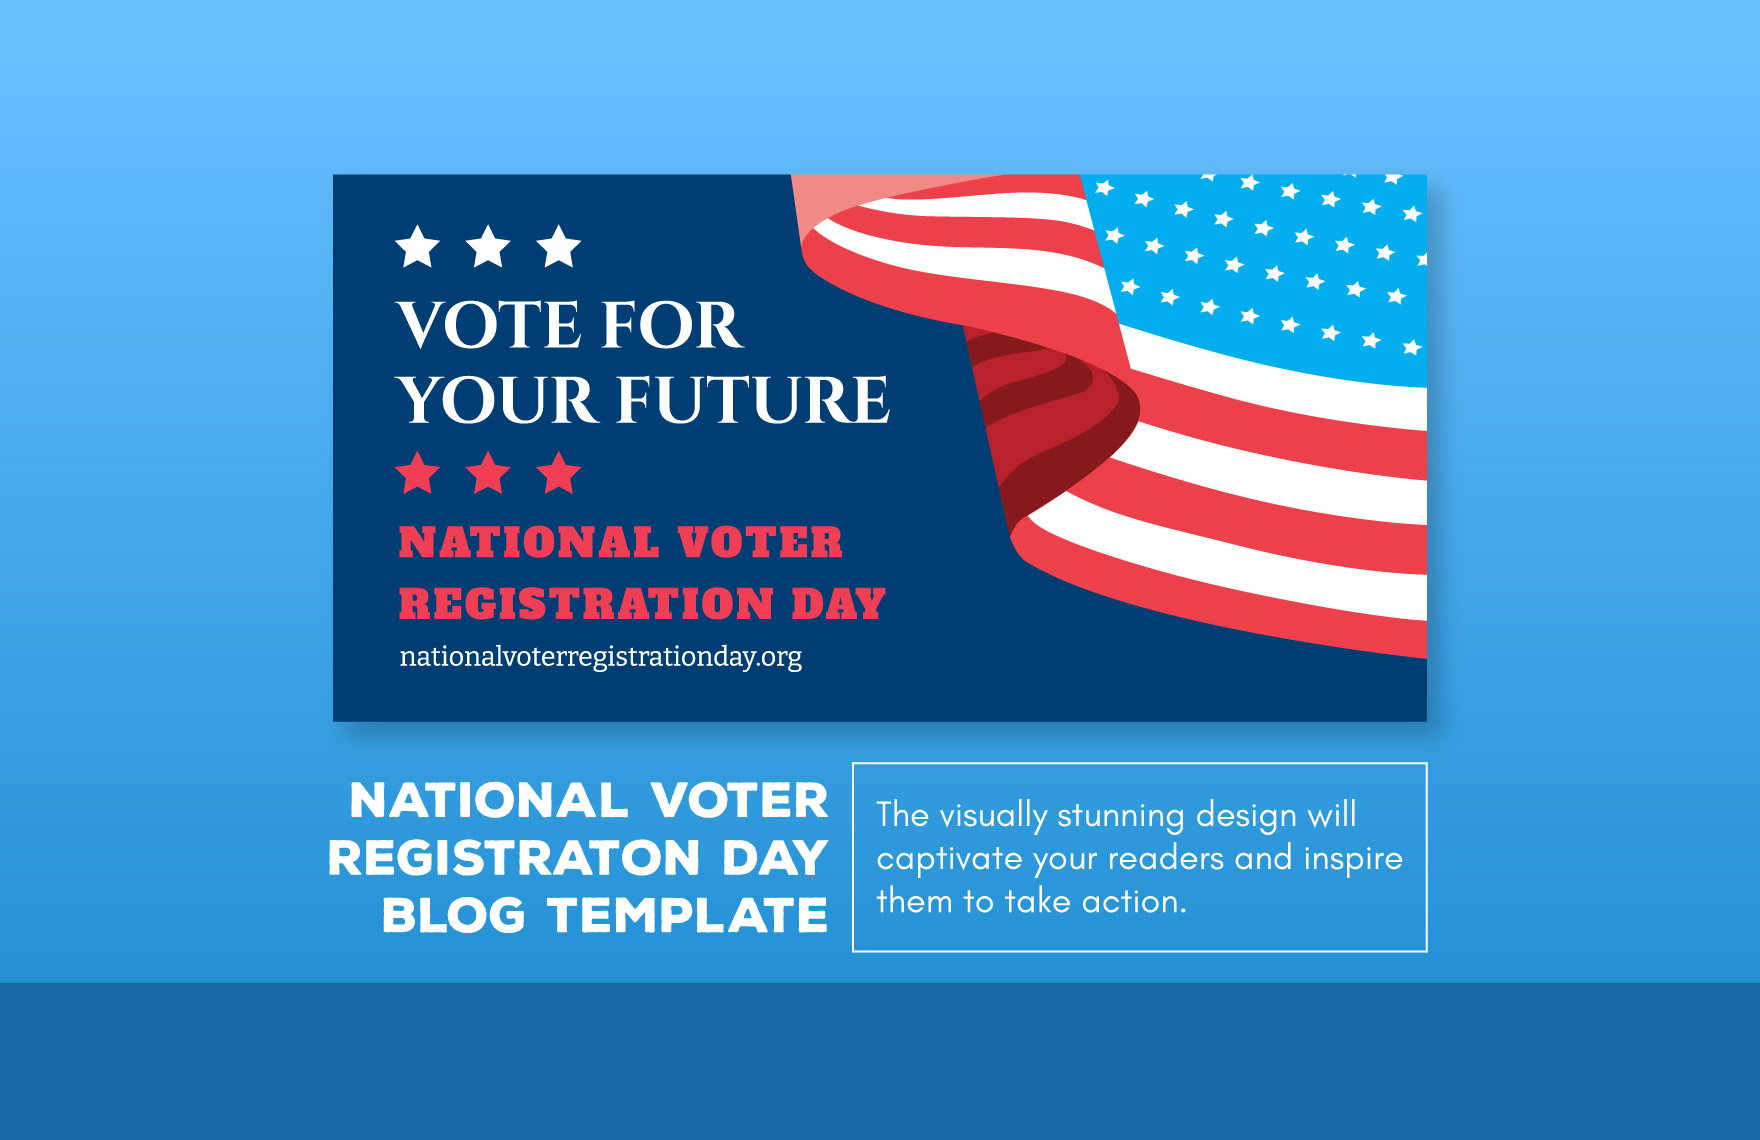 Free National Voter Registration Day Blog Banner Template in Illustrator, PSD, PNG